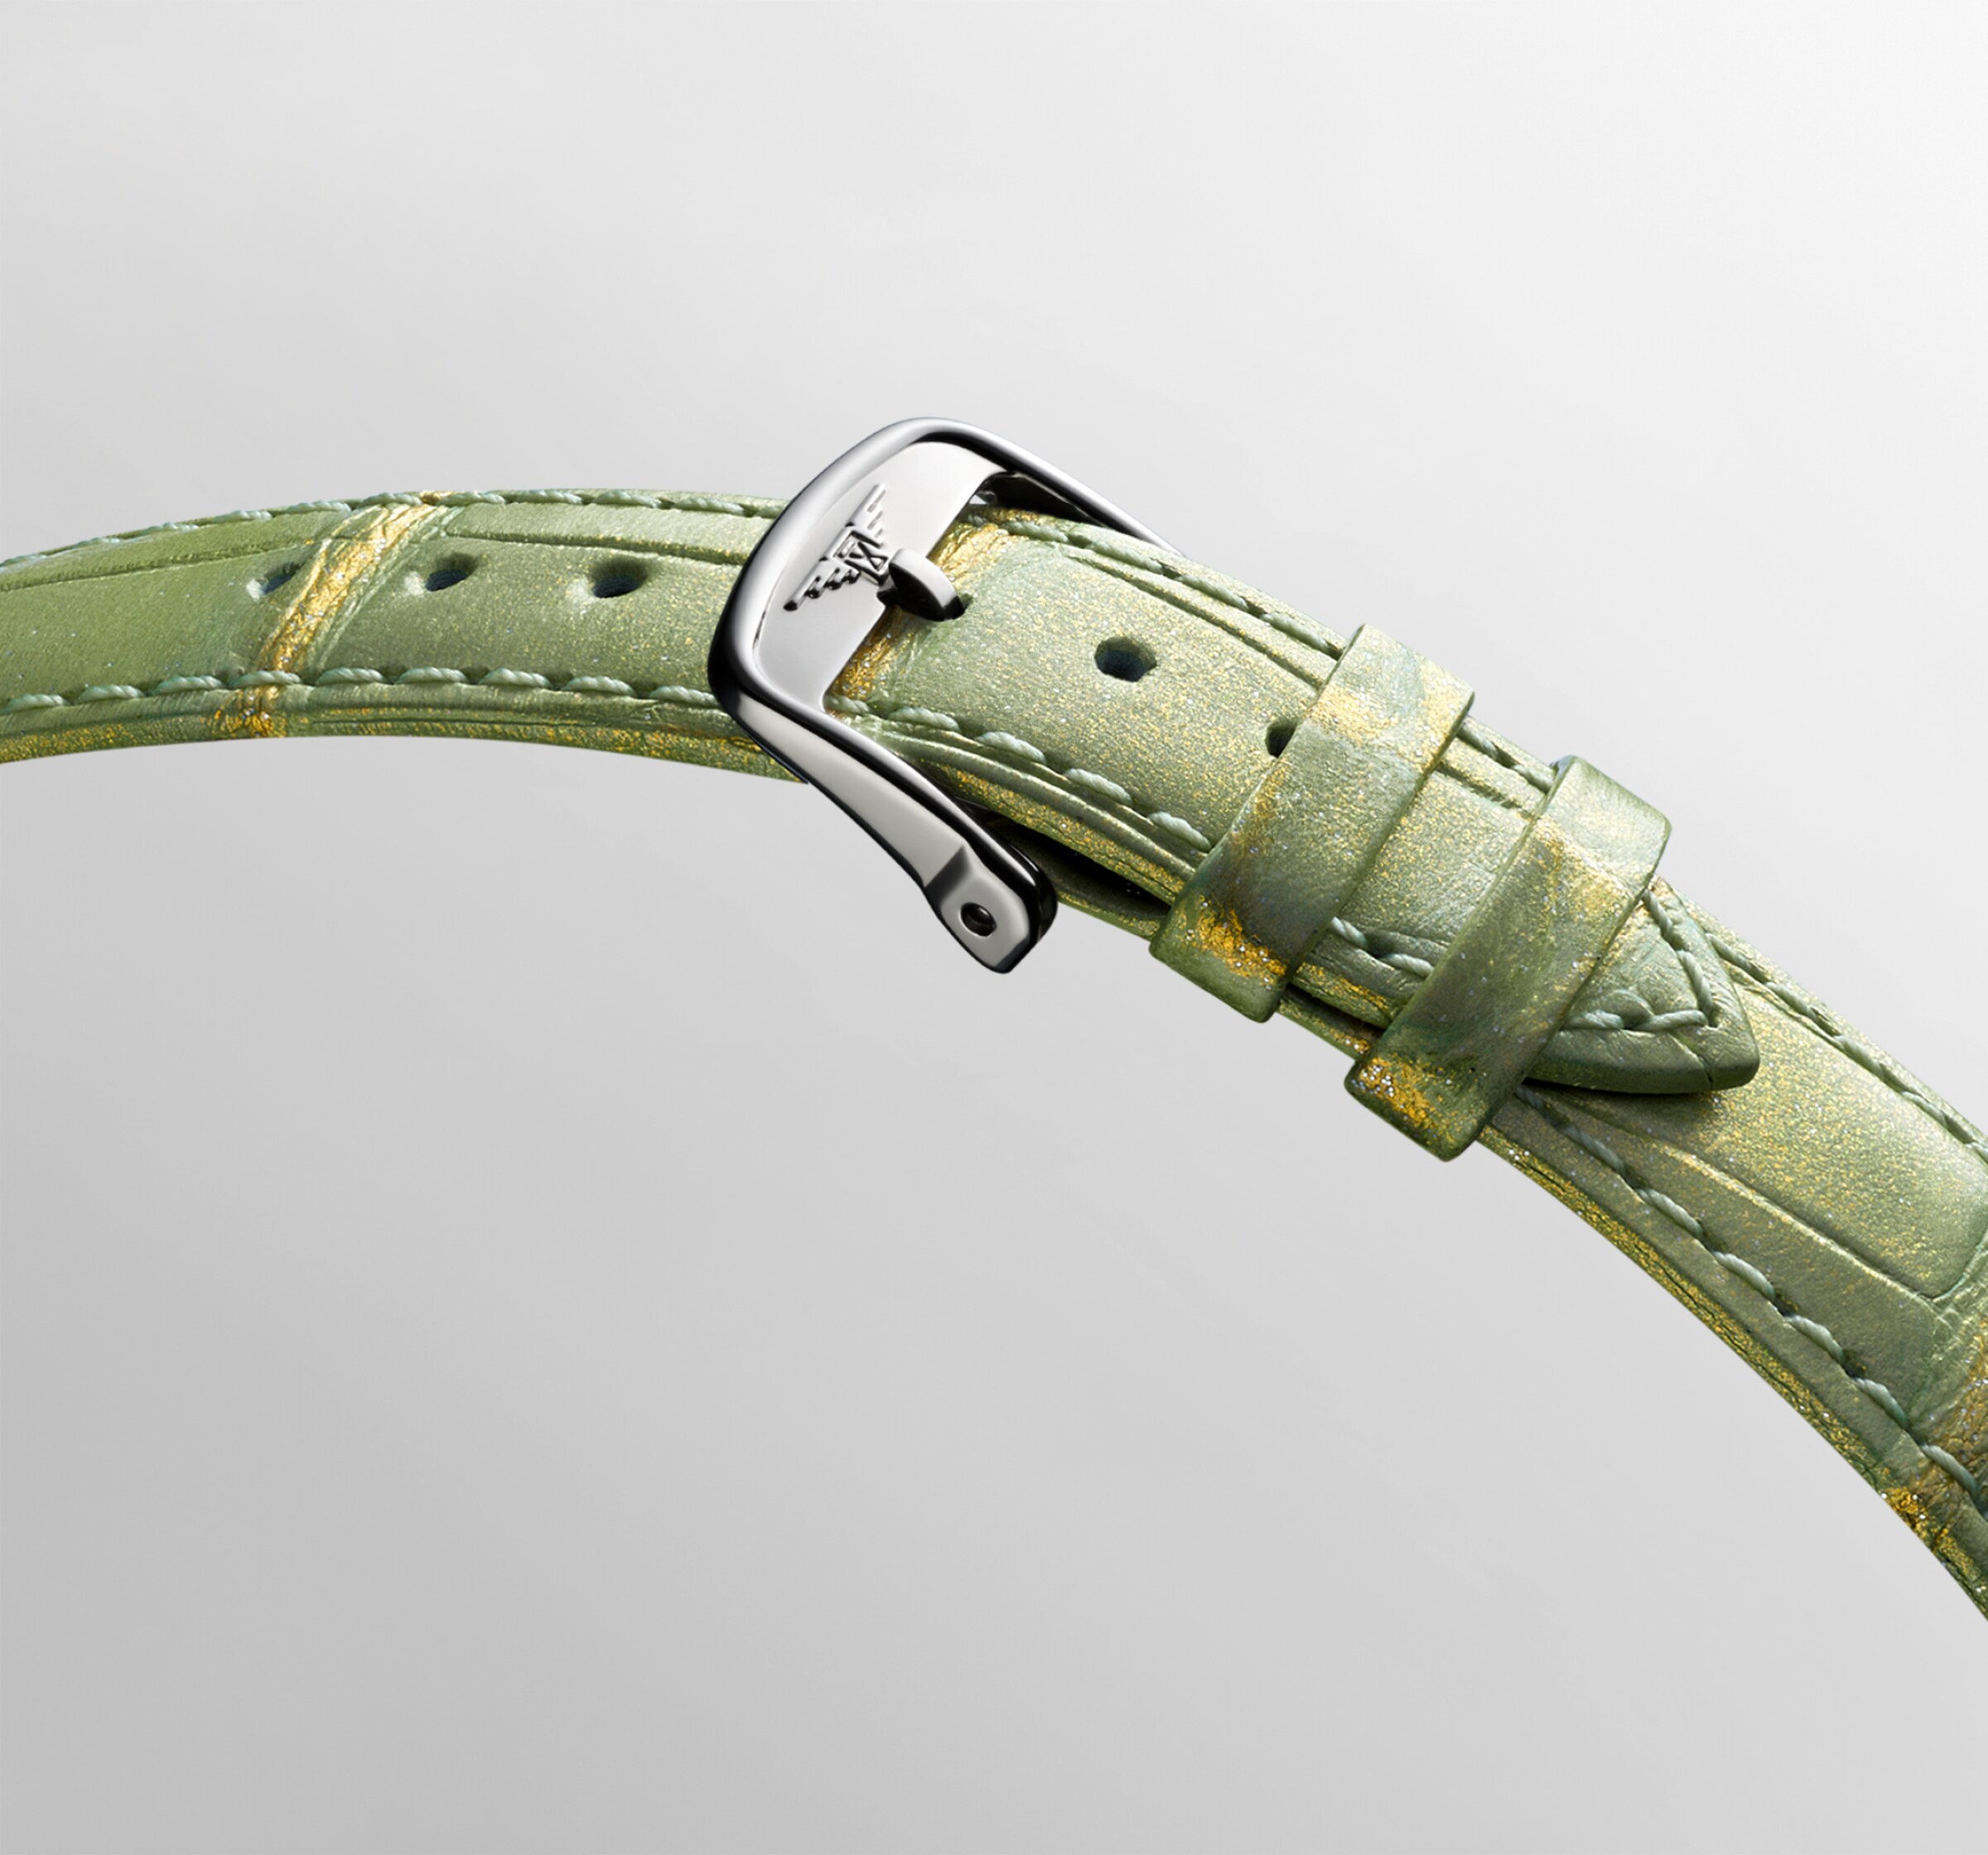 Longines MINI DOLCEVITA Quartz Stainless steel Watch - L5.200.0.05.2